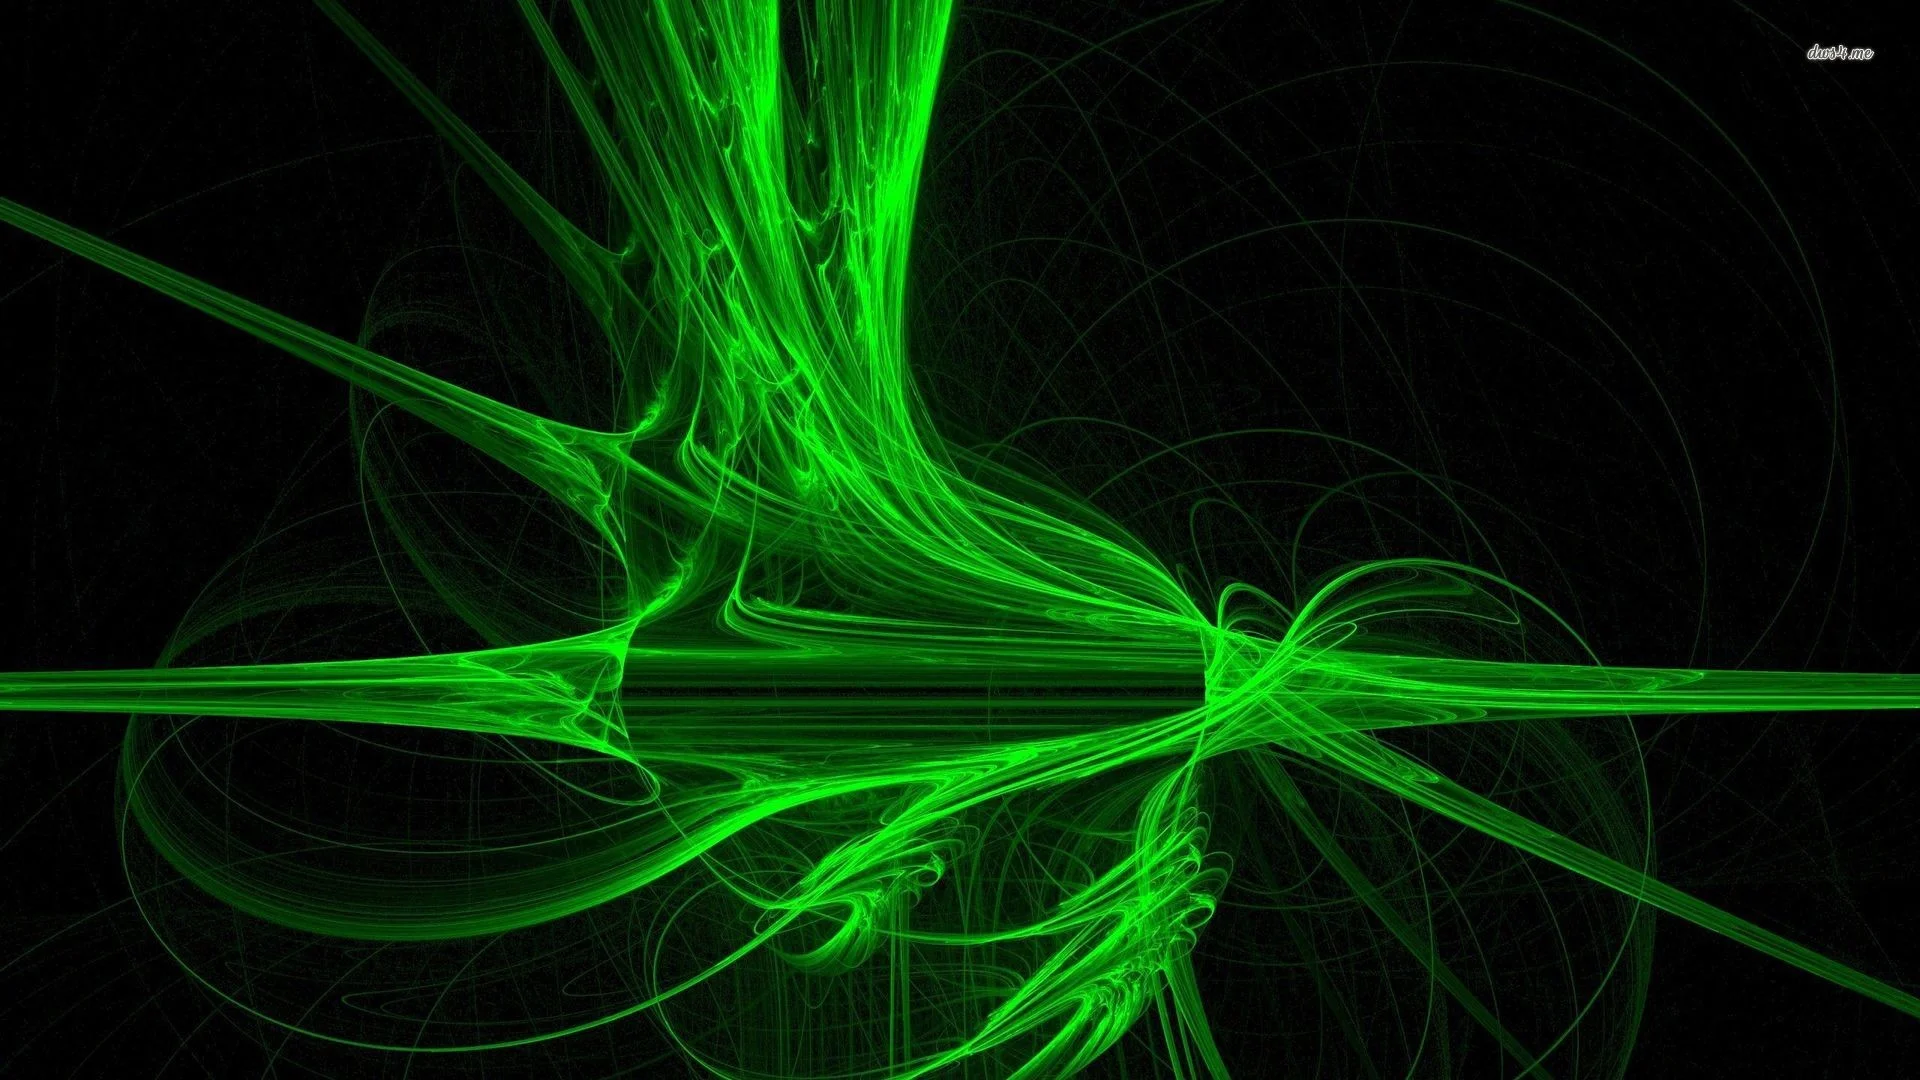 Wallpaper 27284 neon green fibers 1920×1080 abstract